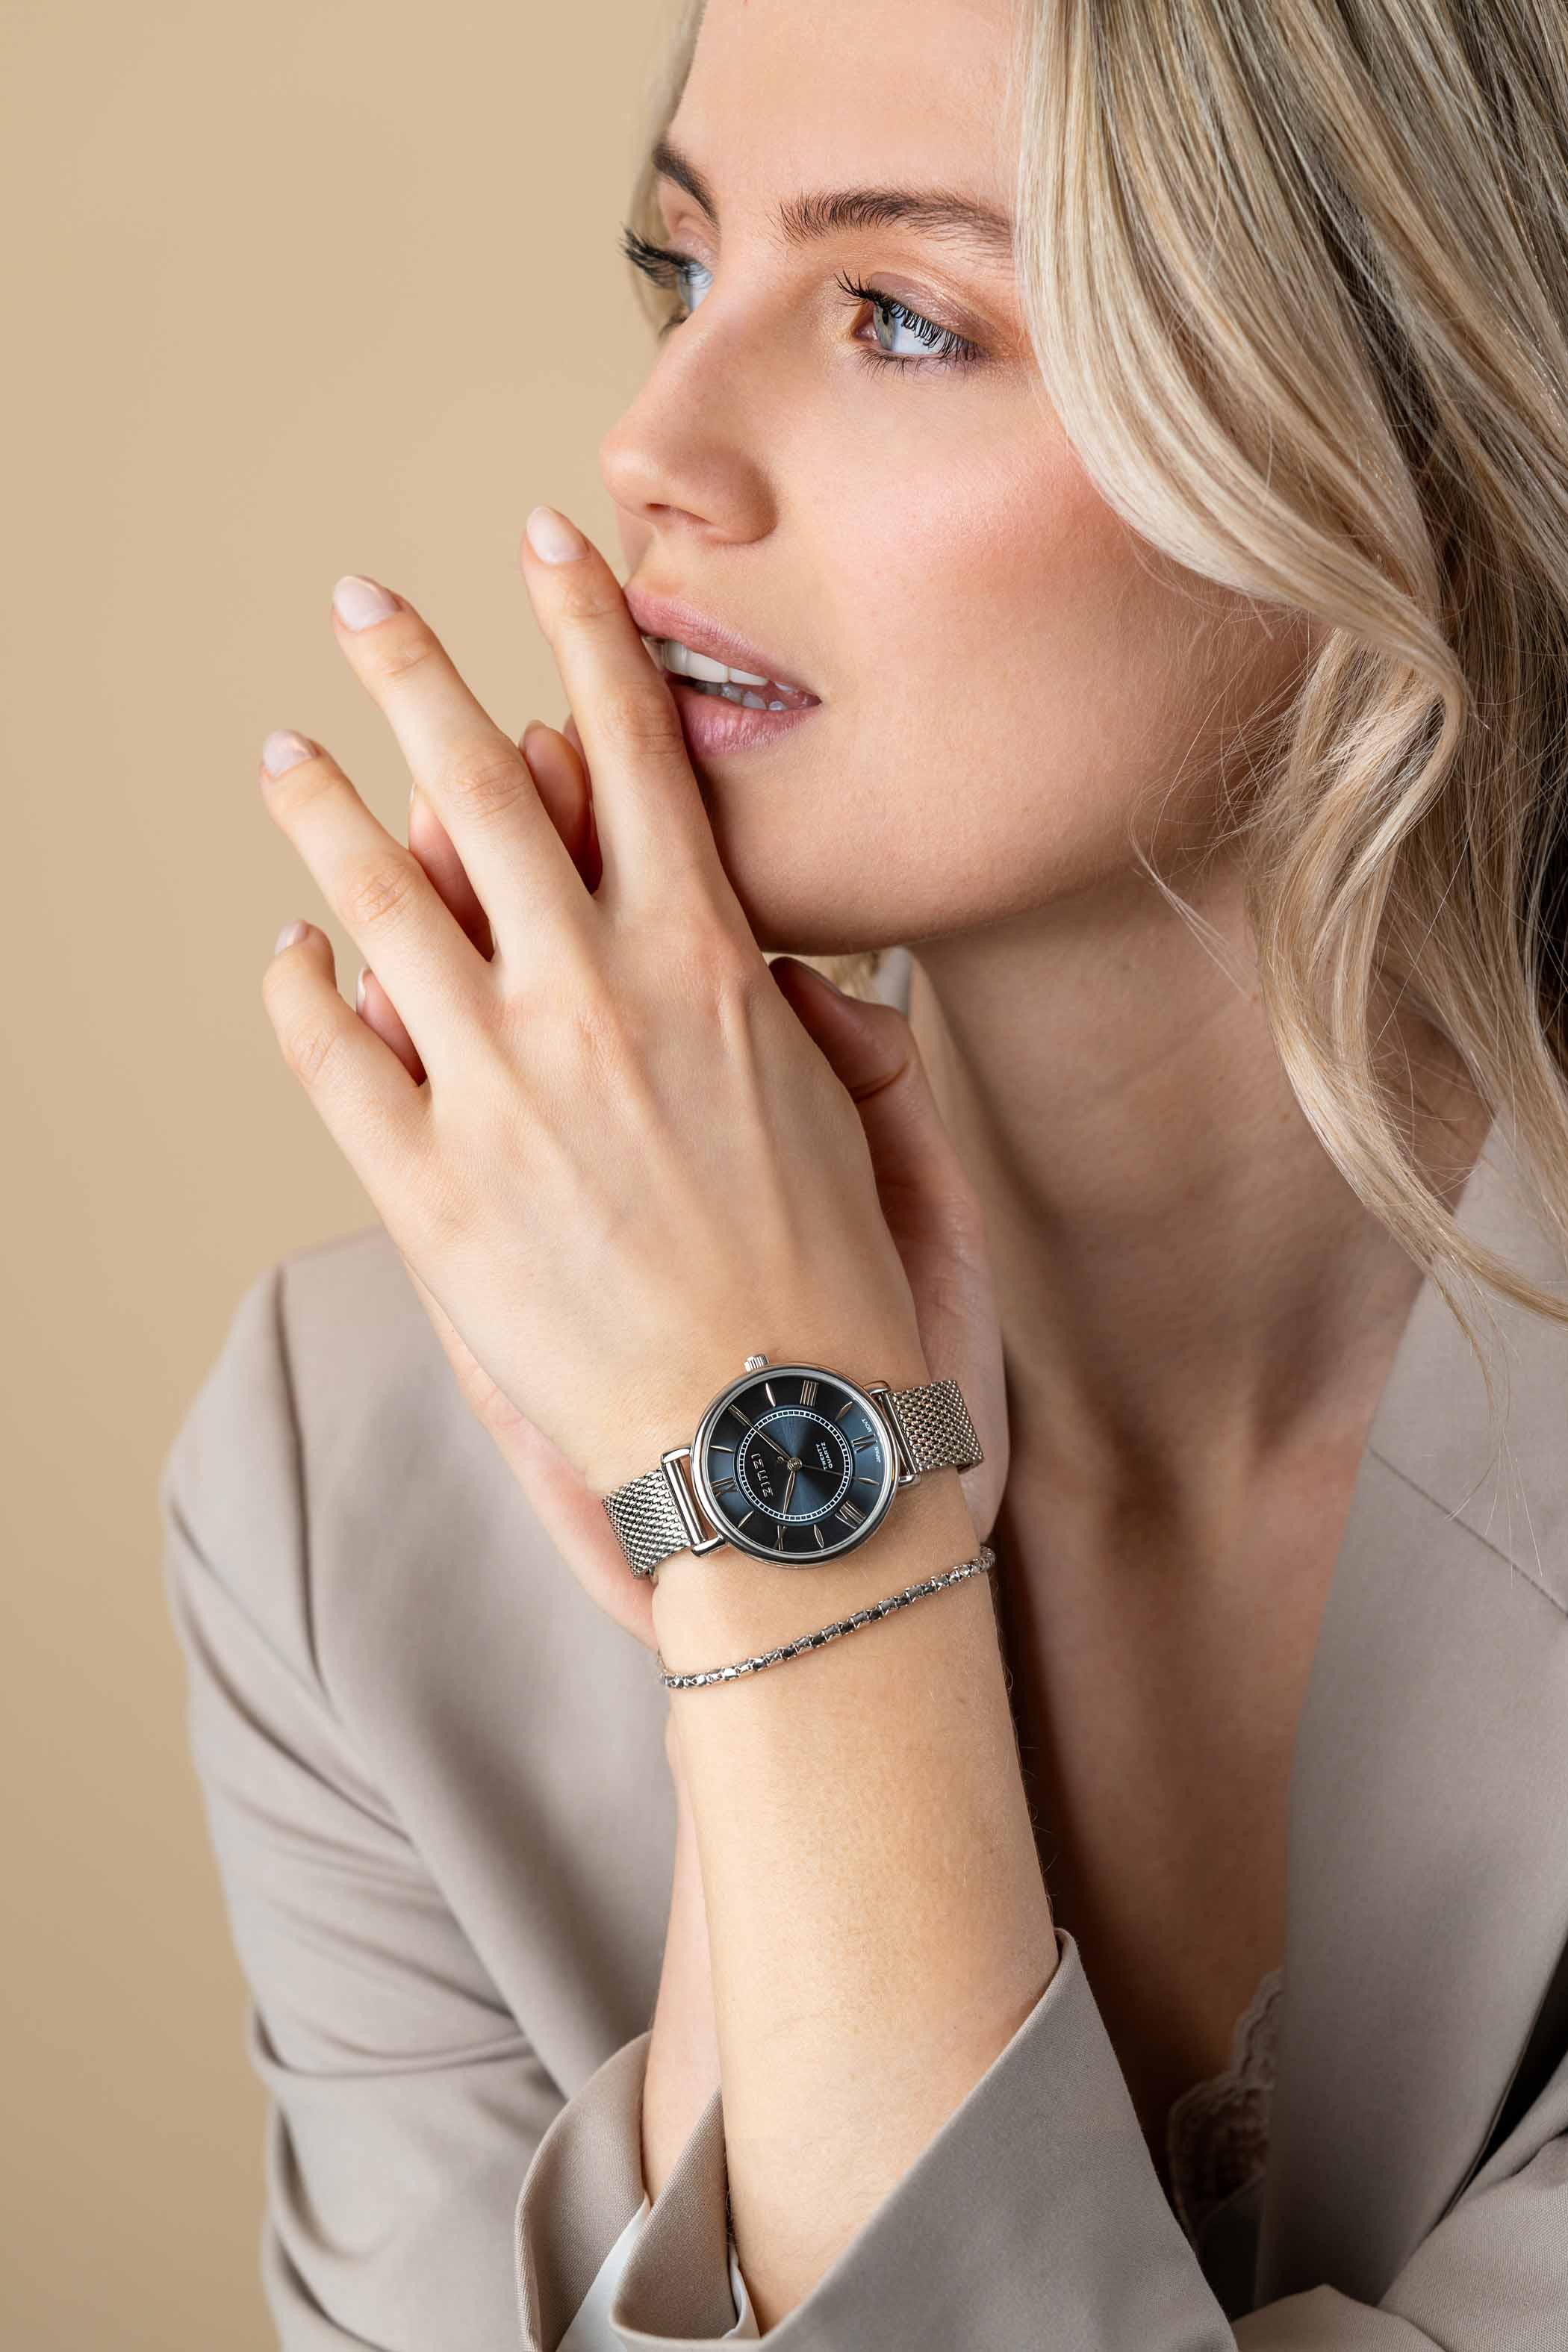 Zinzi horloge 34mm blauwe.wzpl. kast en mesh band